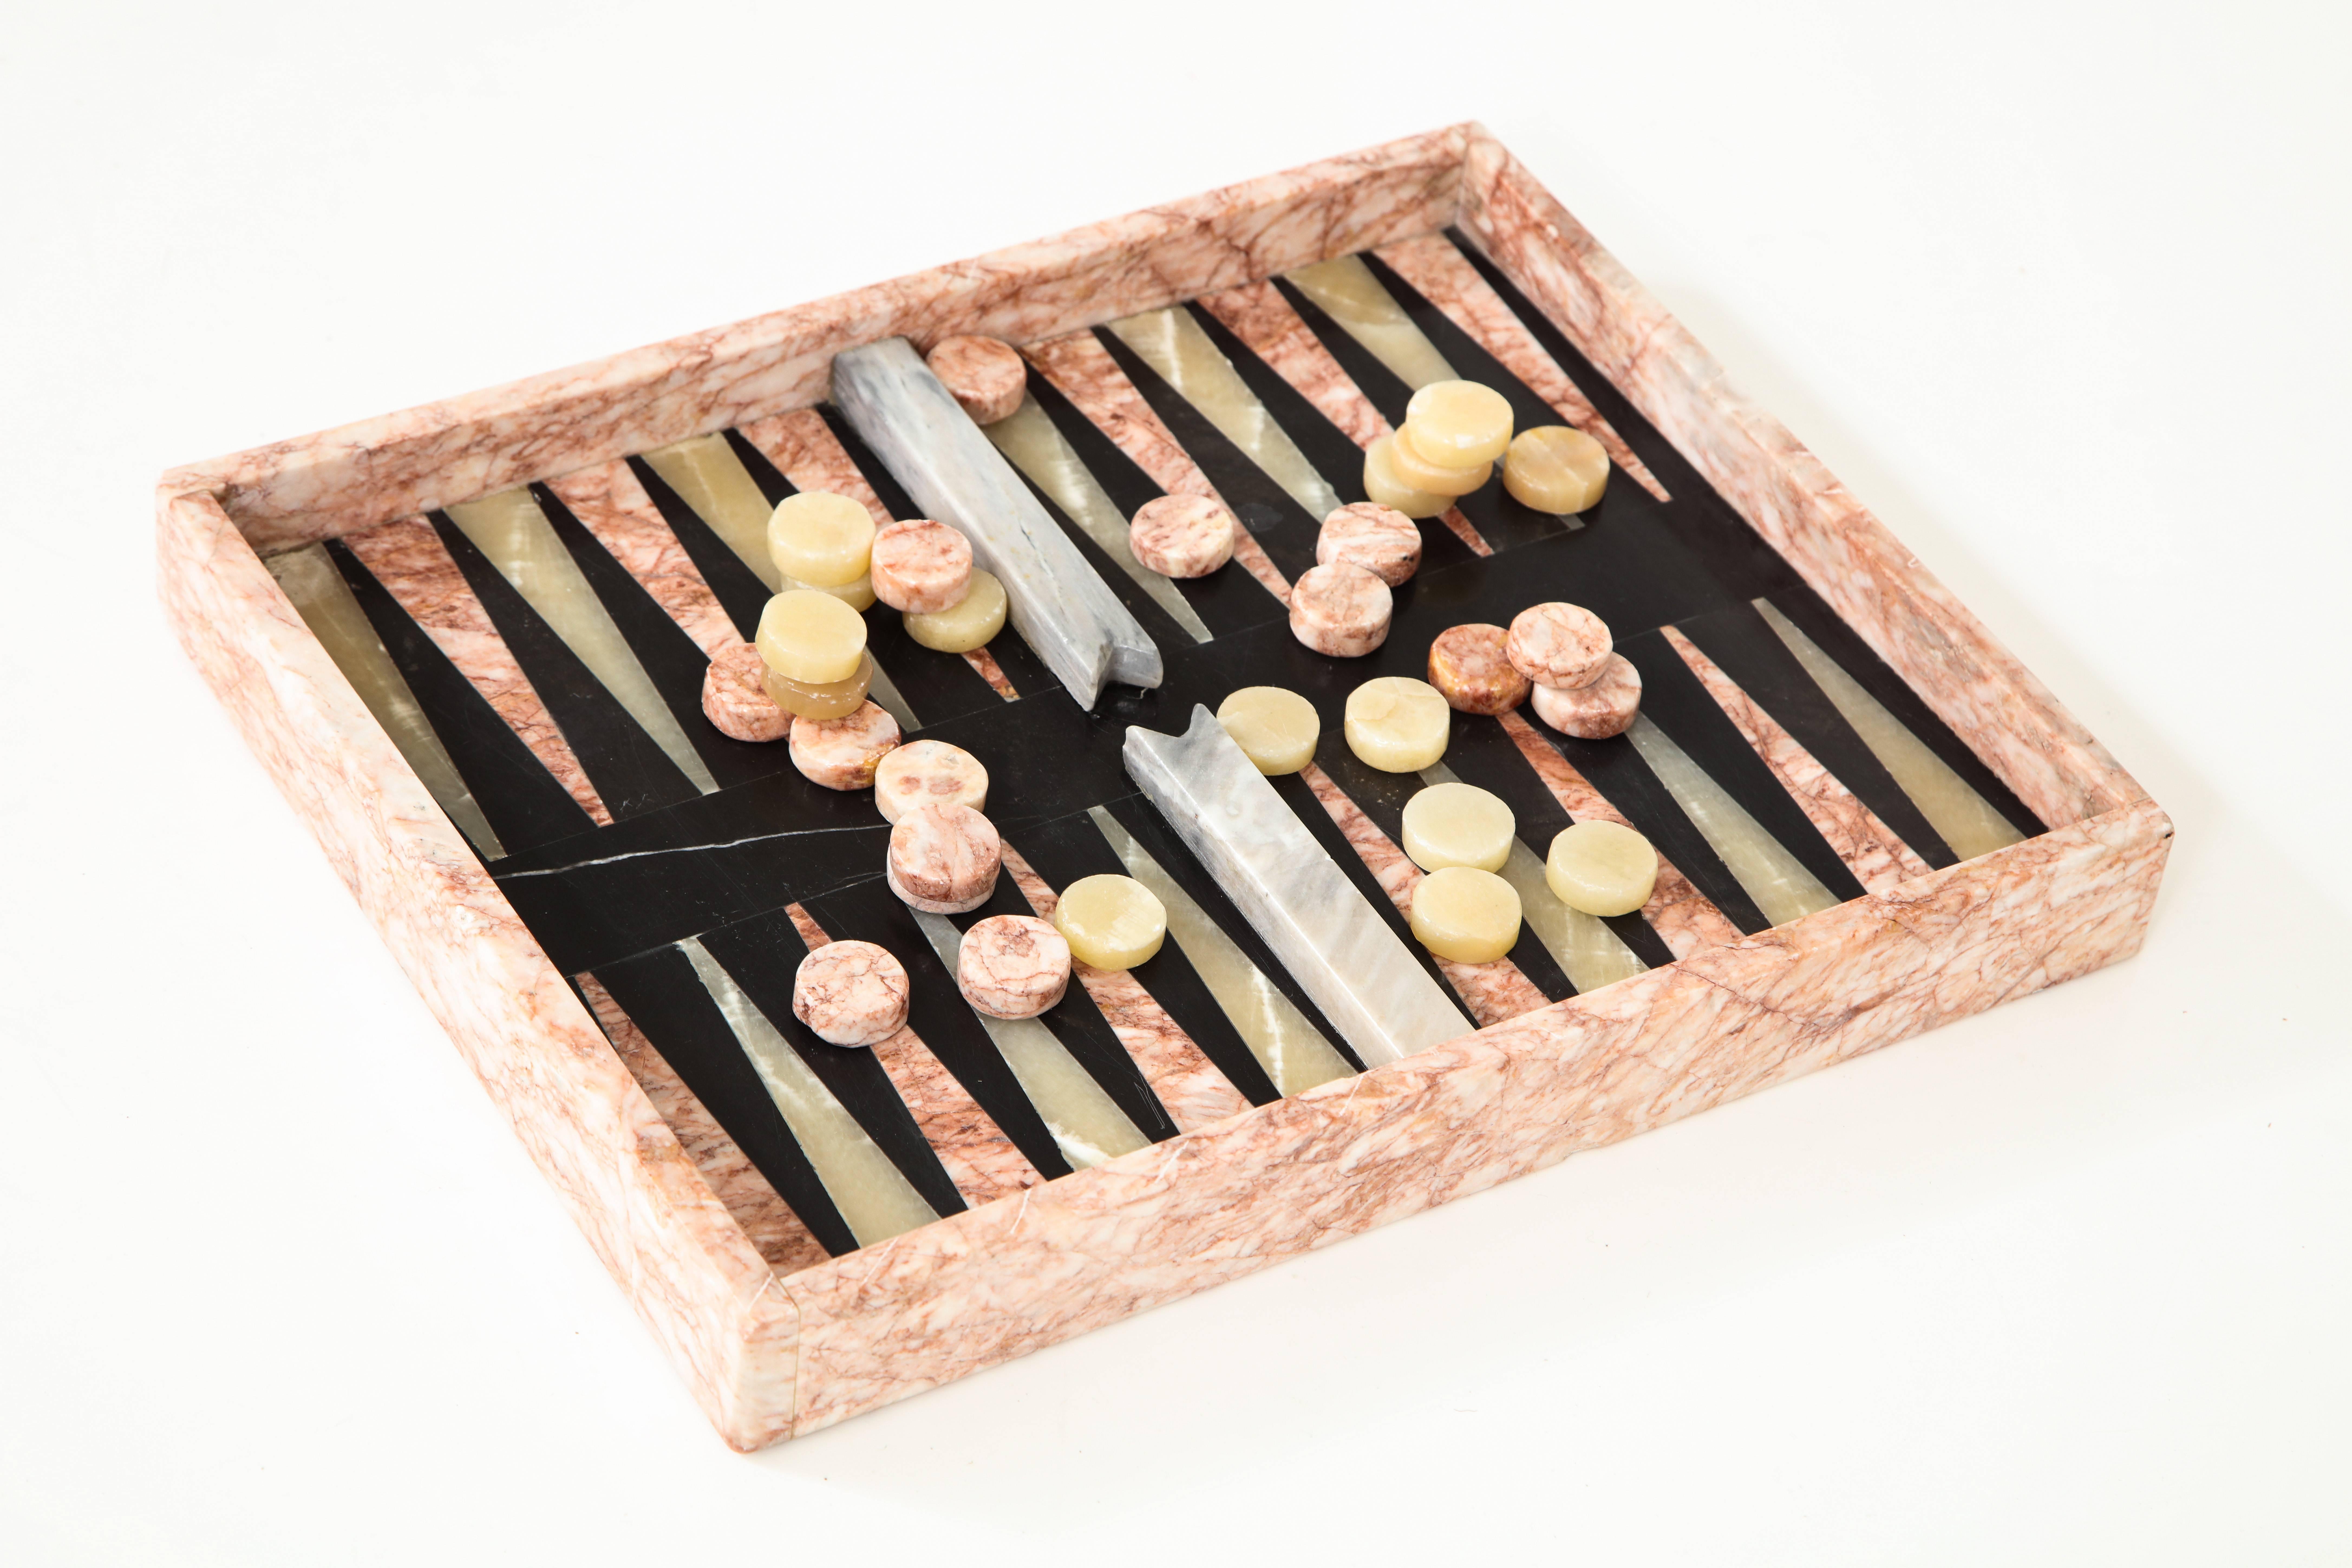 marble backgammon set